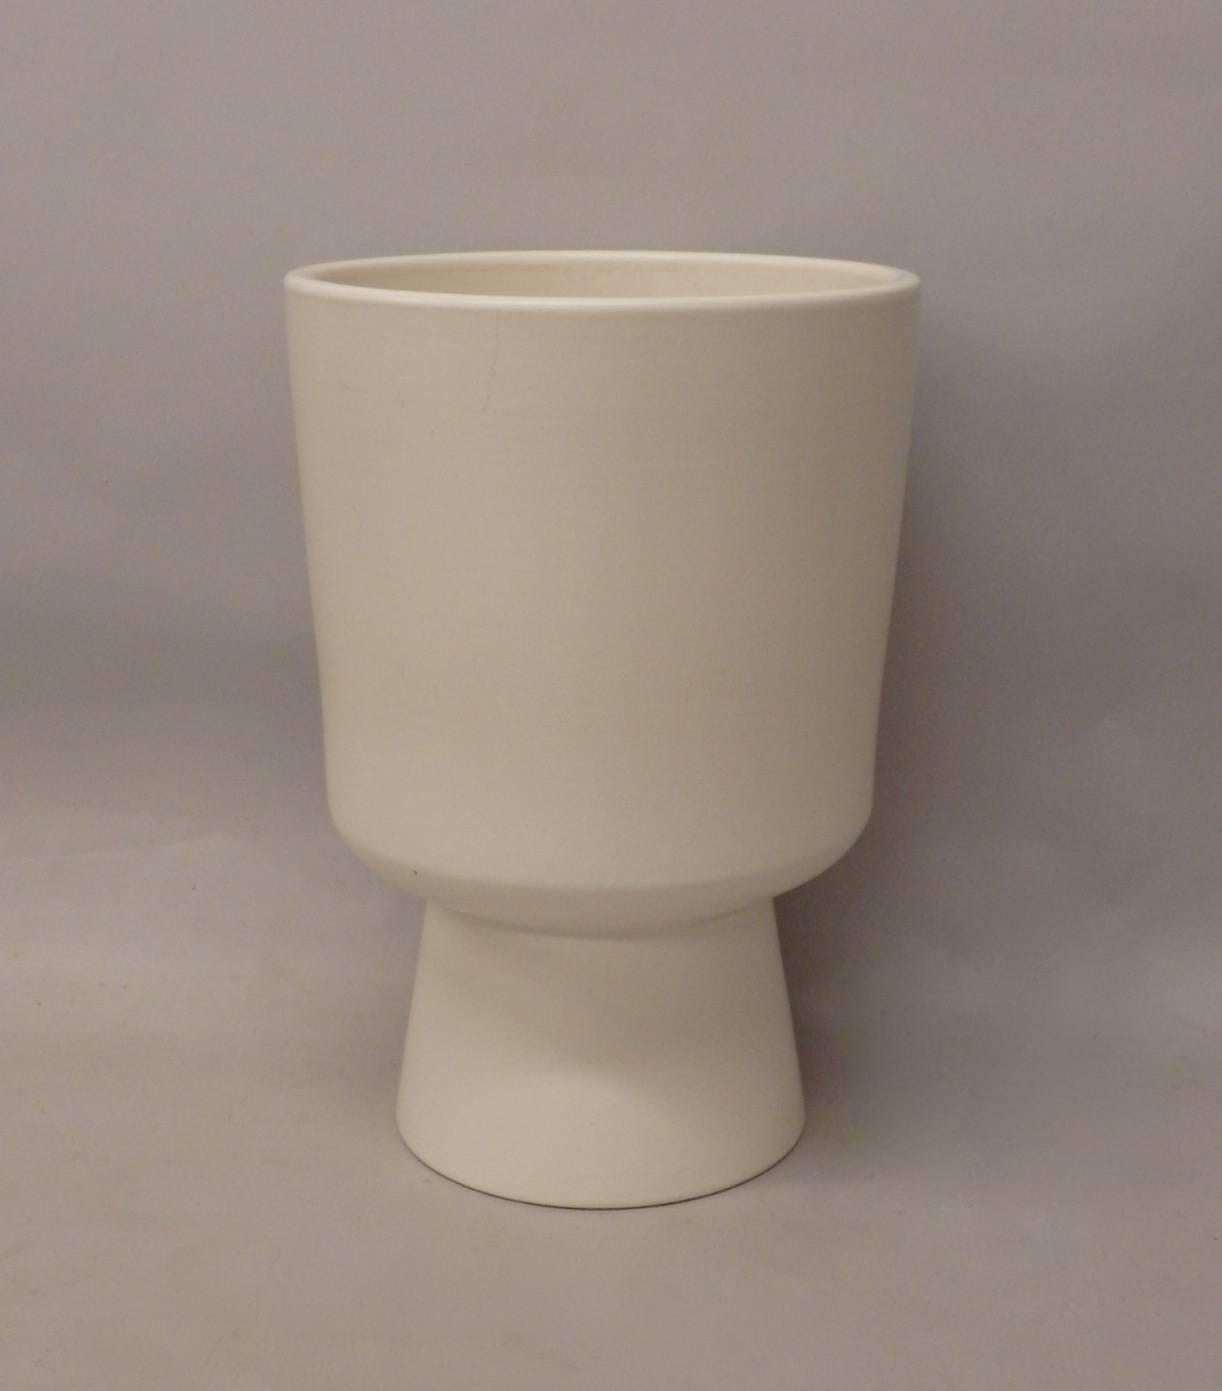 Matte White Malcom Leland Architectural Pottery Planter Pot 1